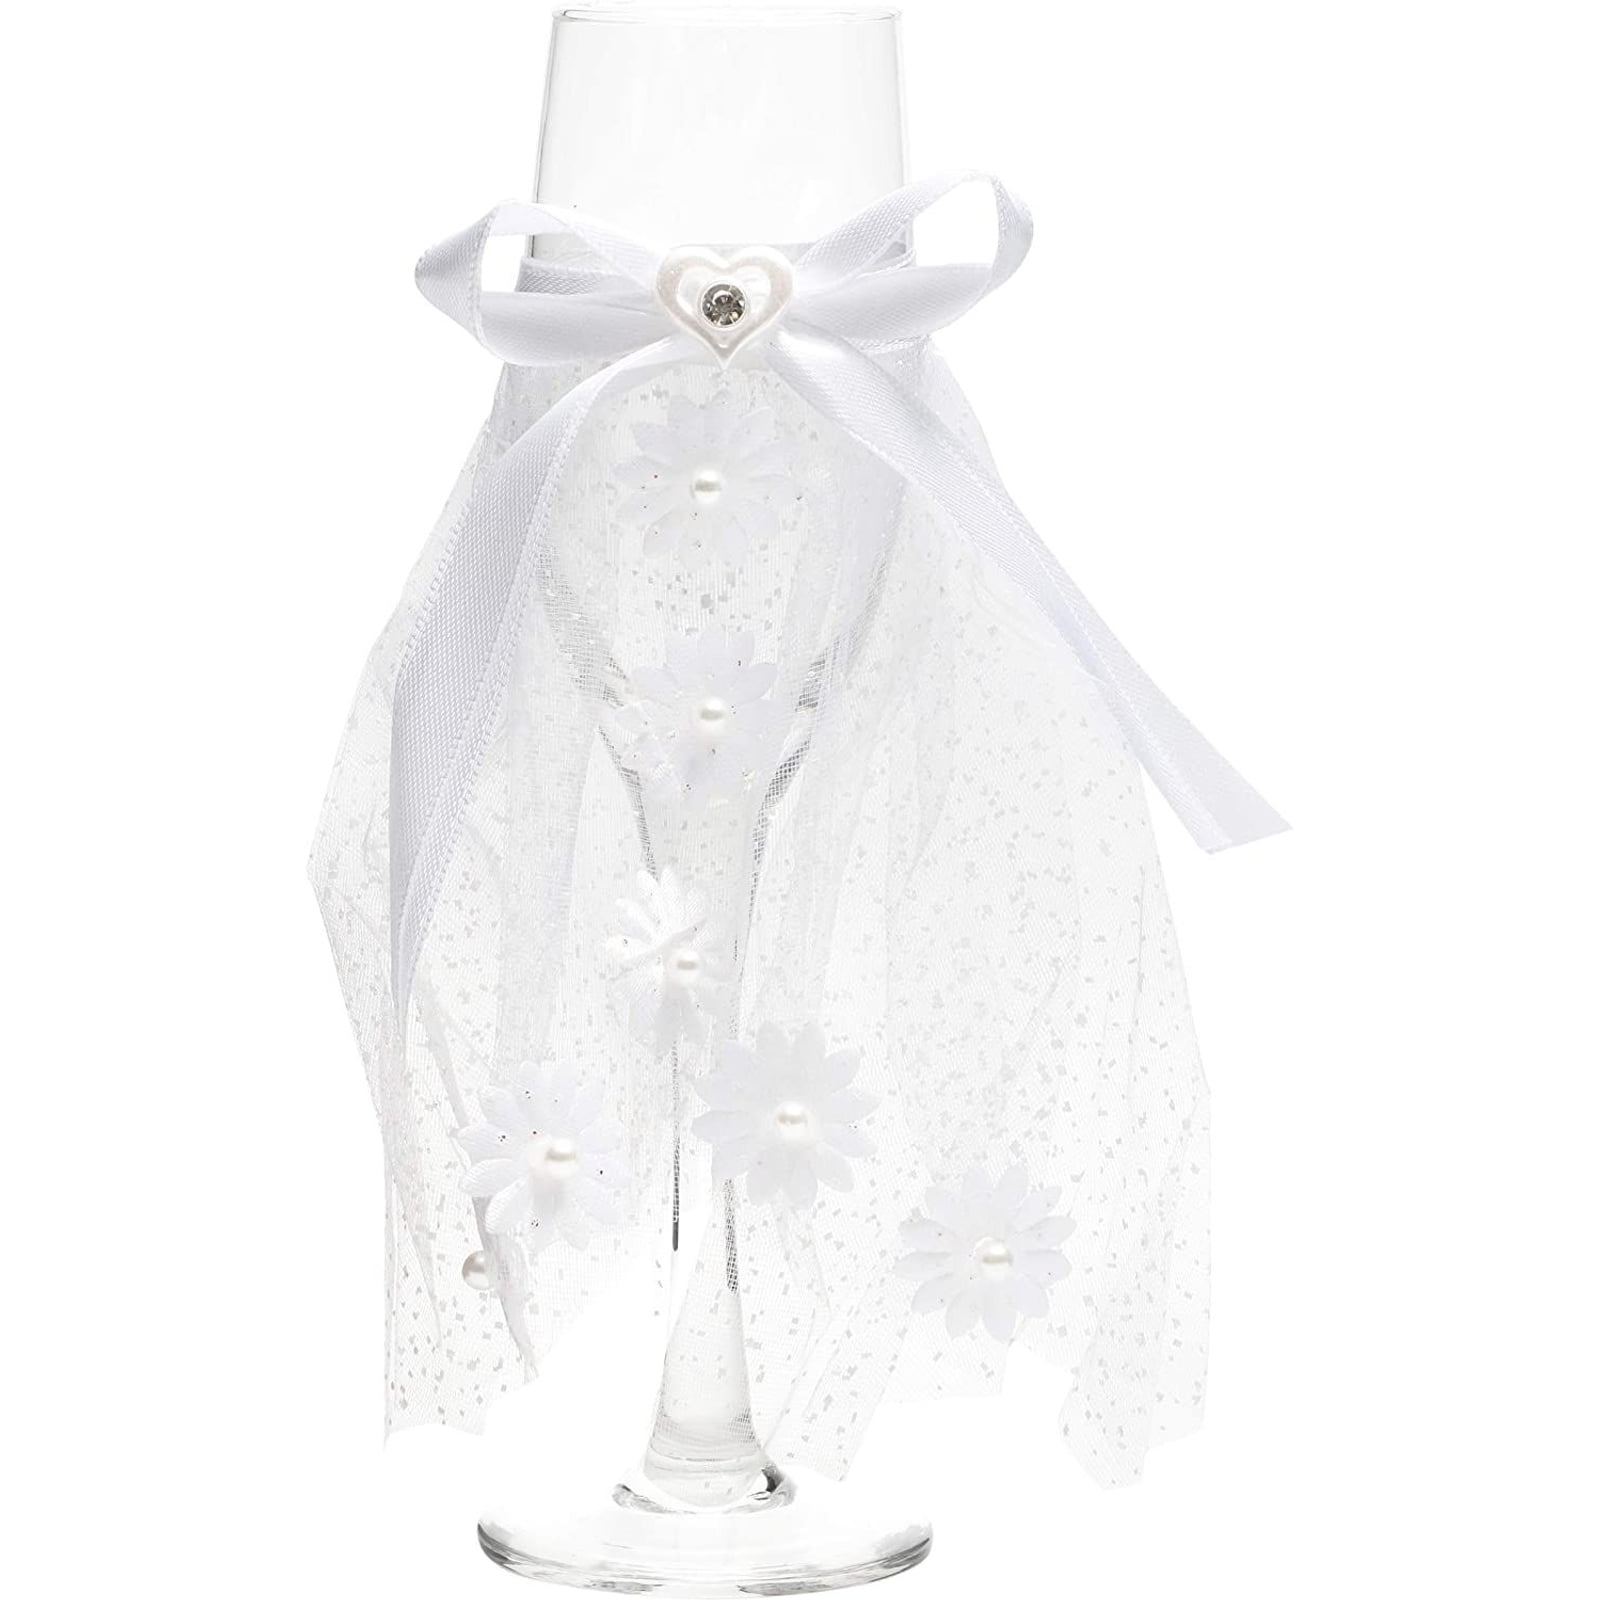 Mr & Mrs Silver Glass Mirror Light Up Box Wall Plaque Wedding Gift Idea 